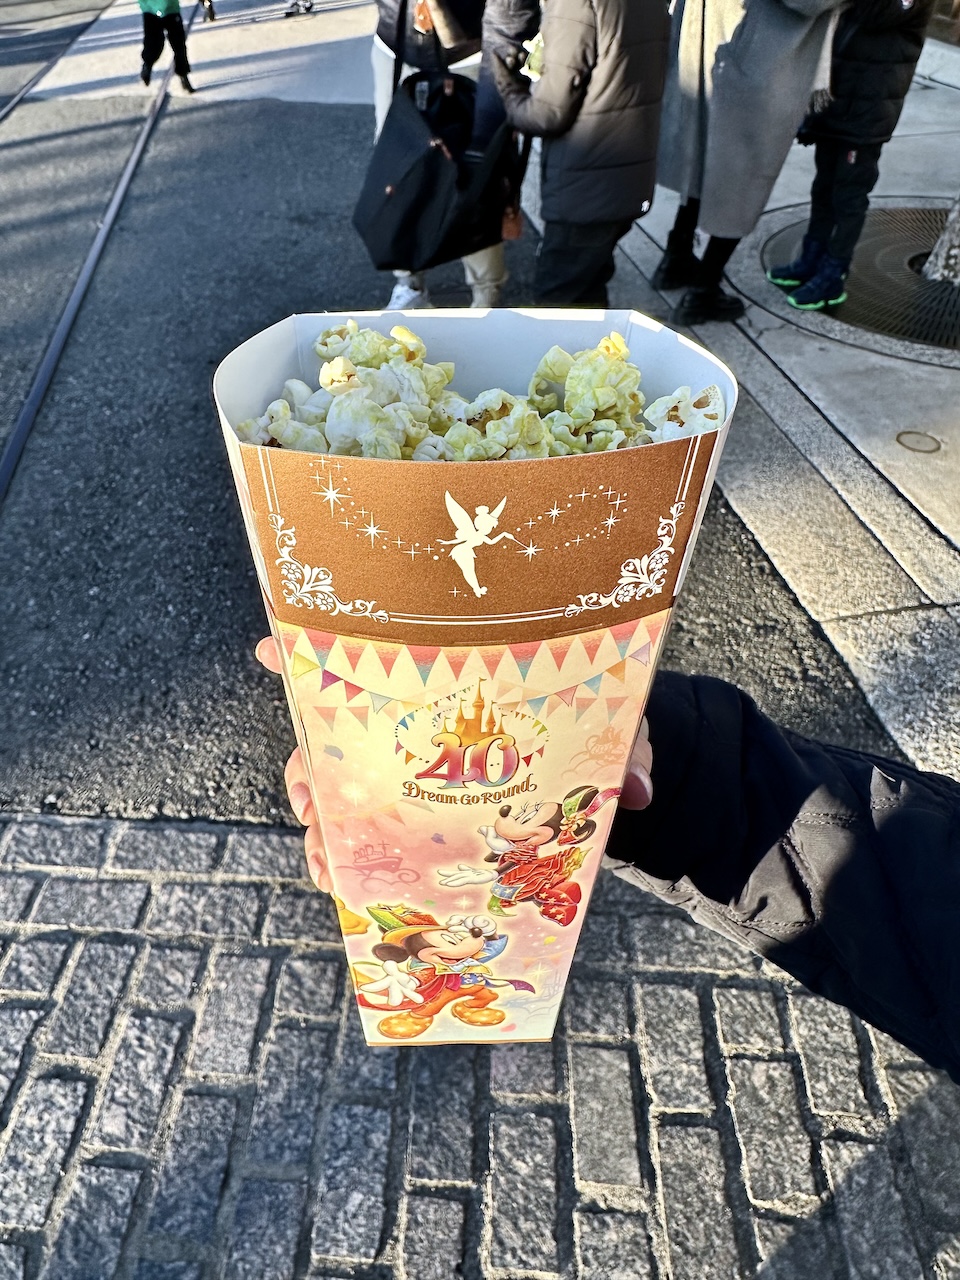 Pistachio Popcorn at Tokyo DisneySea